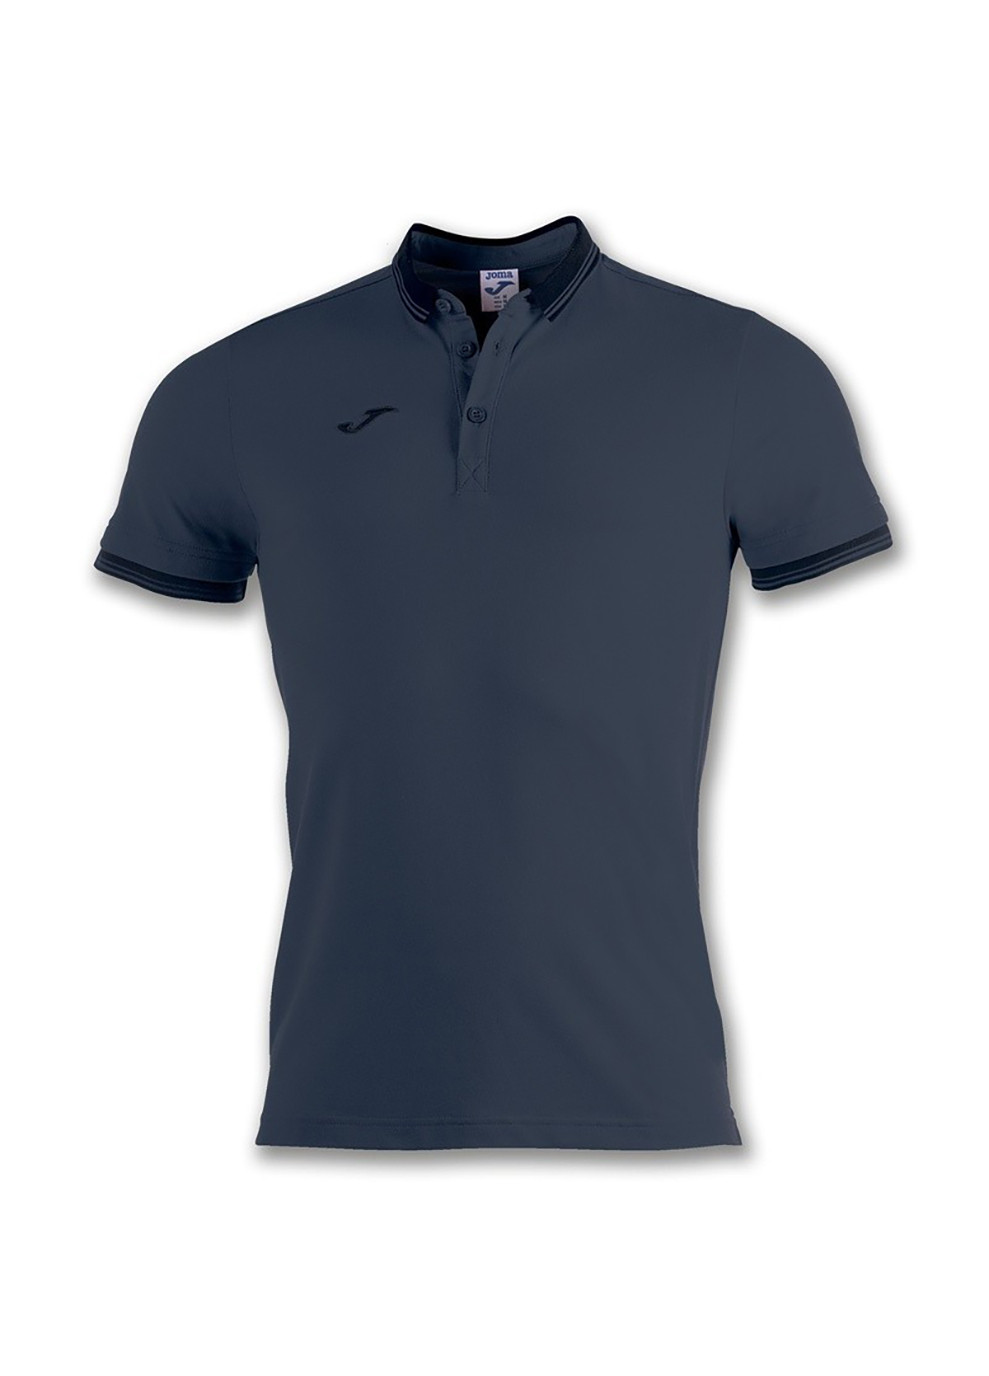 Темно-синяя футболка-поло polo shirt bali ii dark navy s/s темно-синий для мужчин Joma